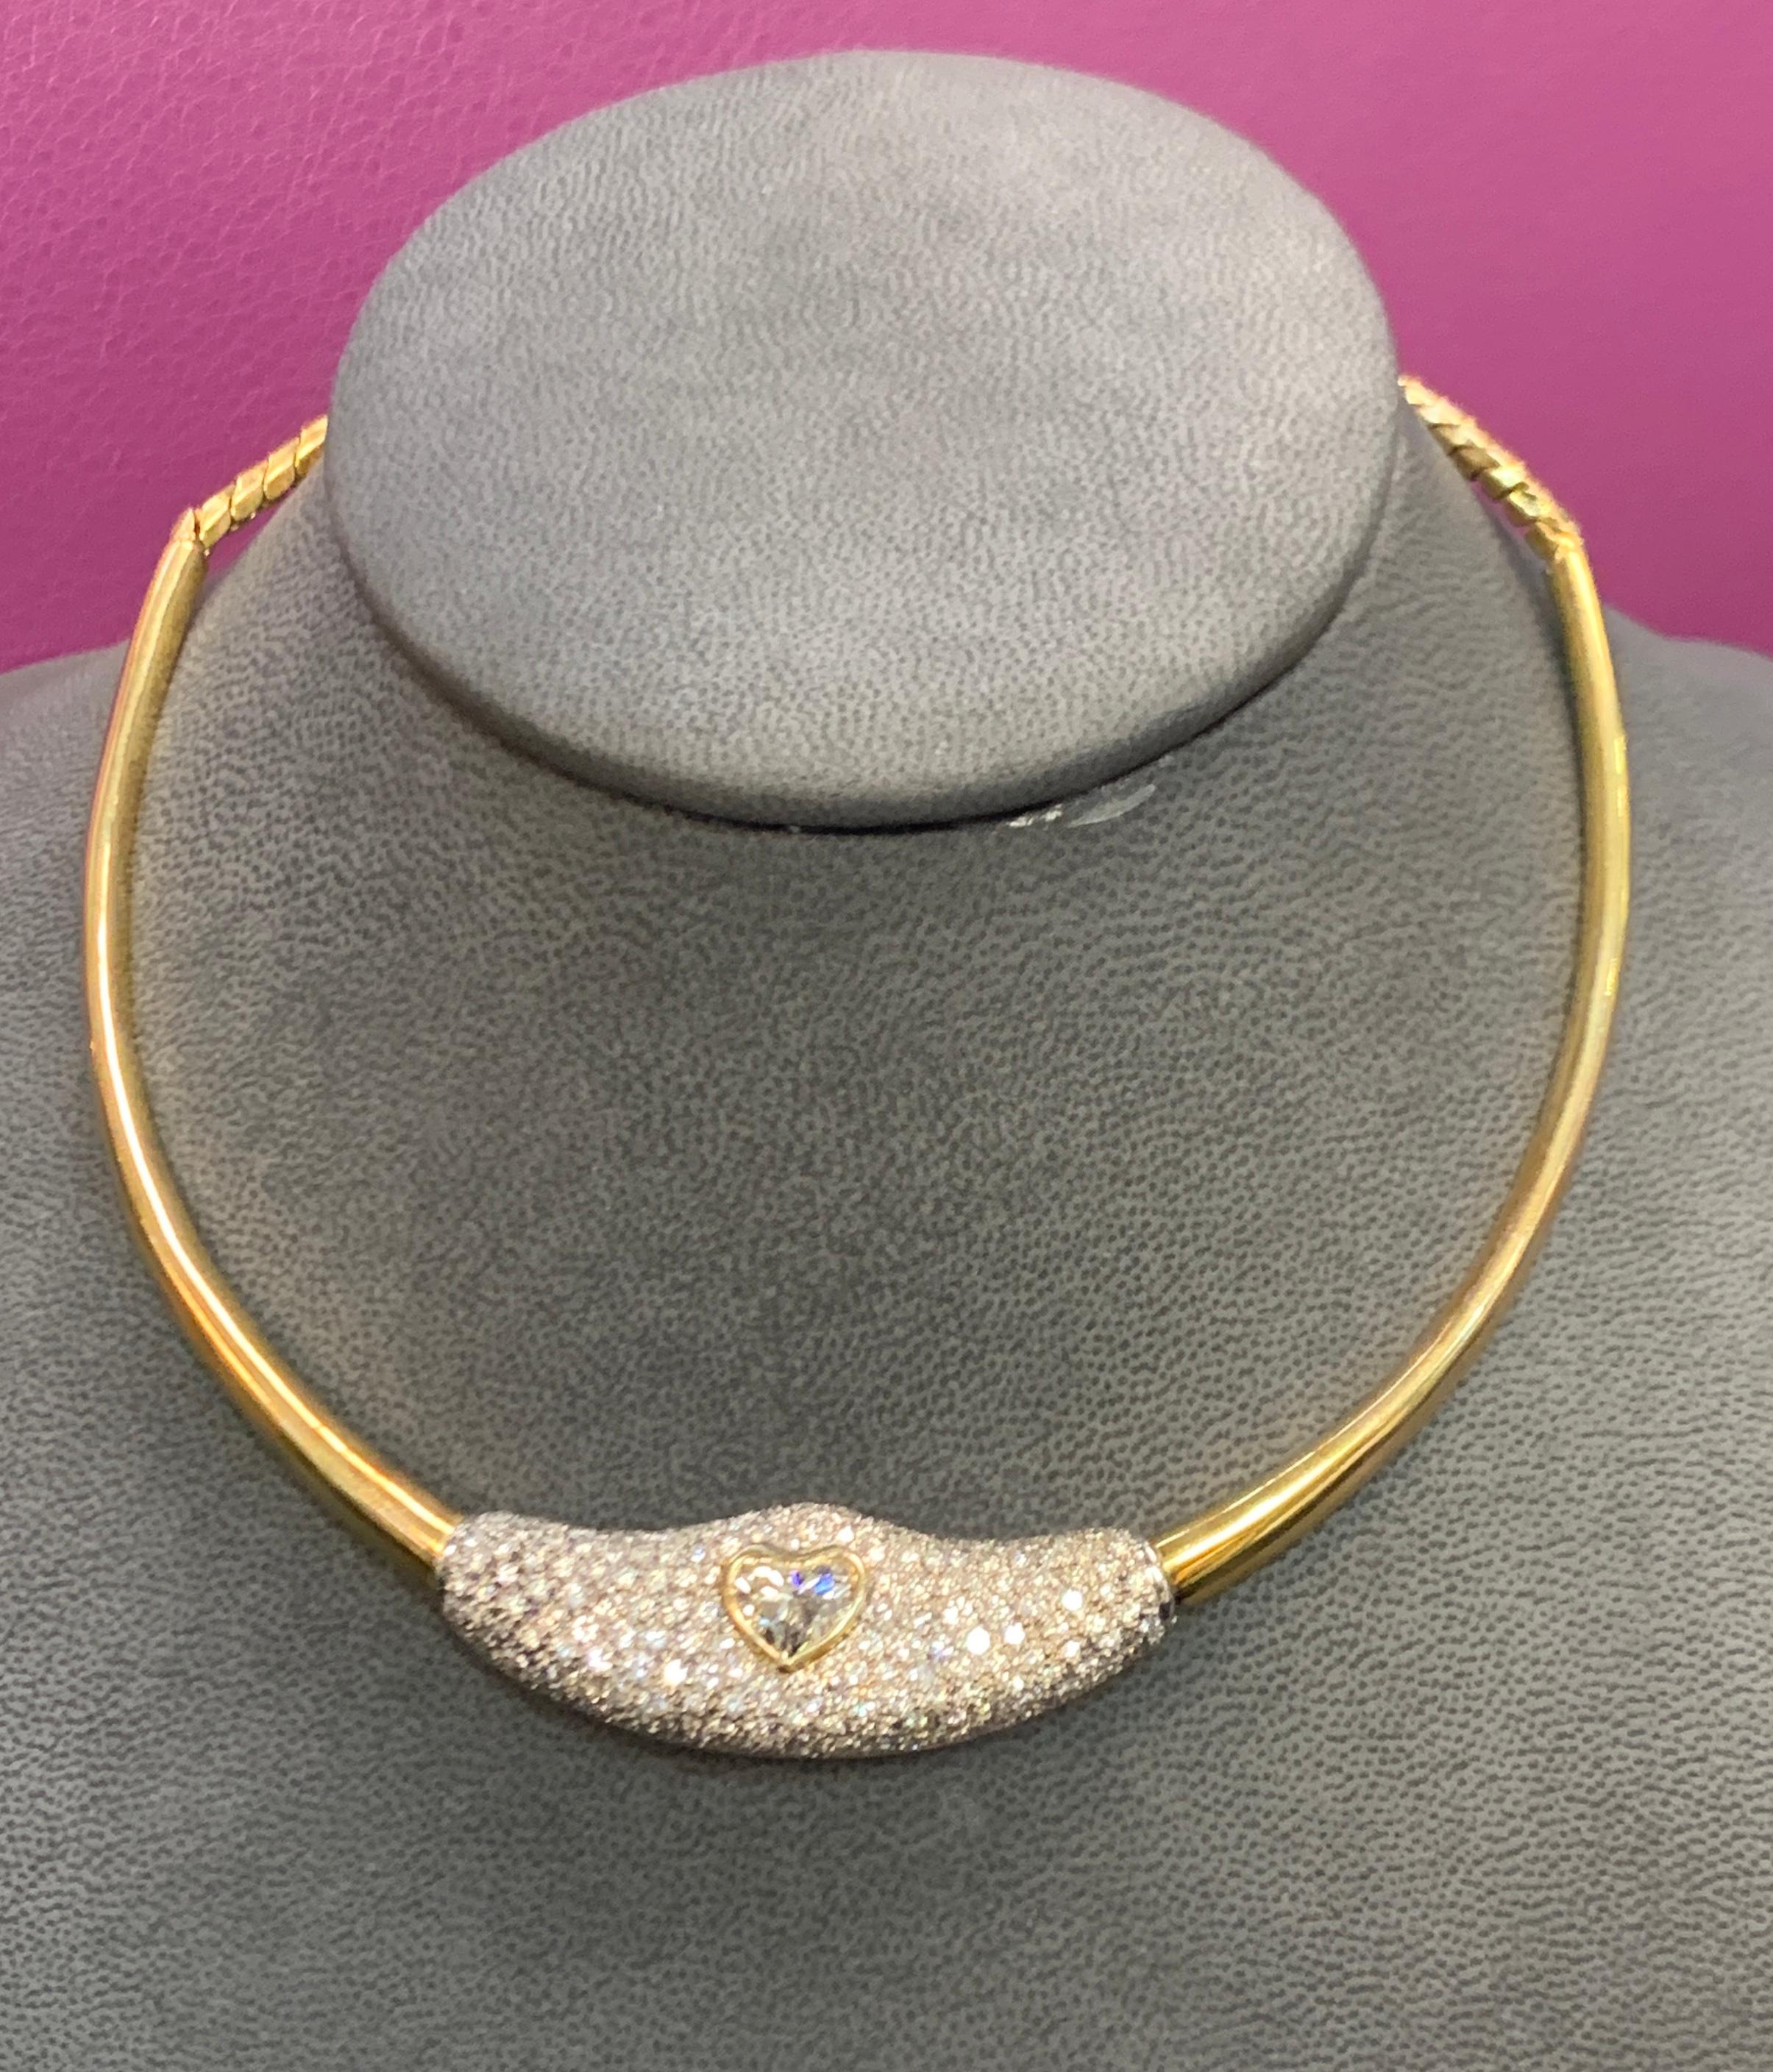 Heart Shape Diamond Yellow Gold Necklace 
Measurements: 14